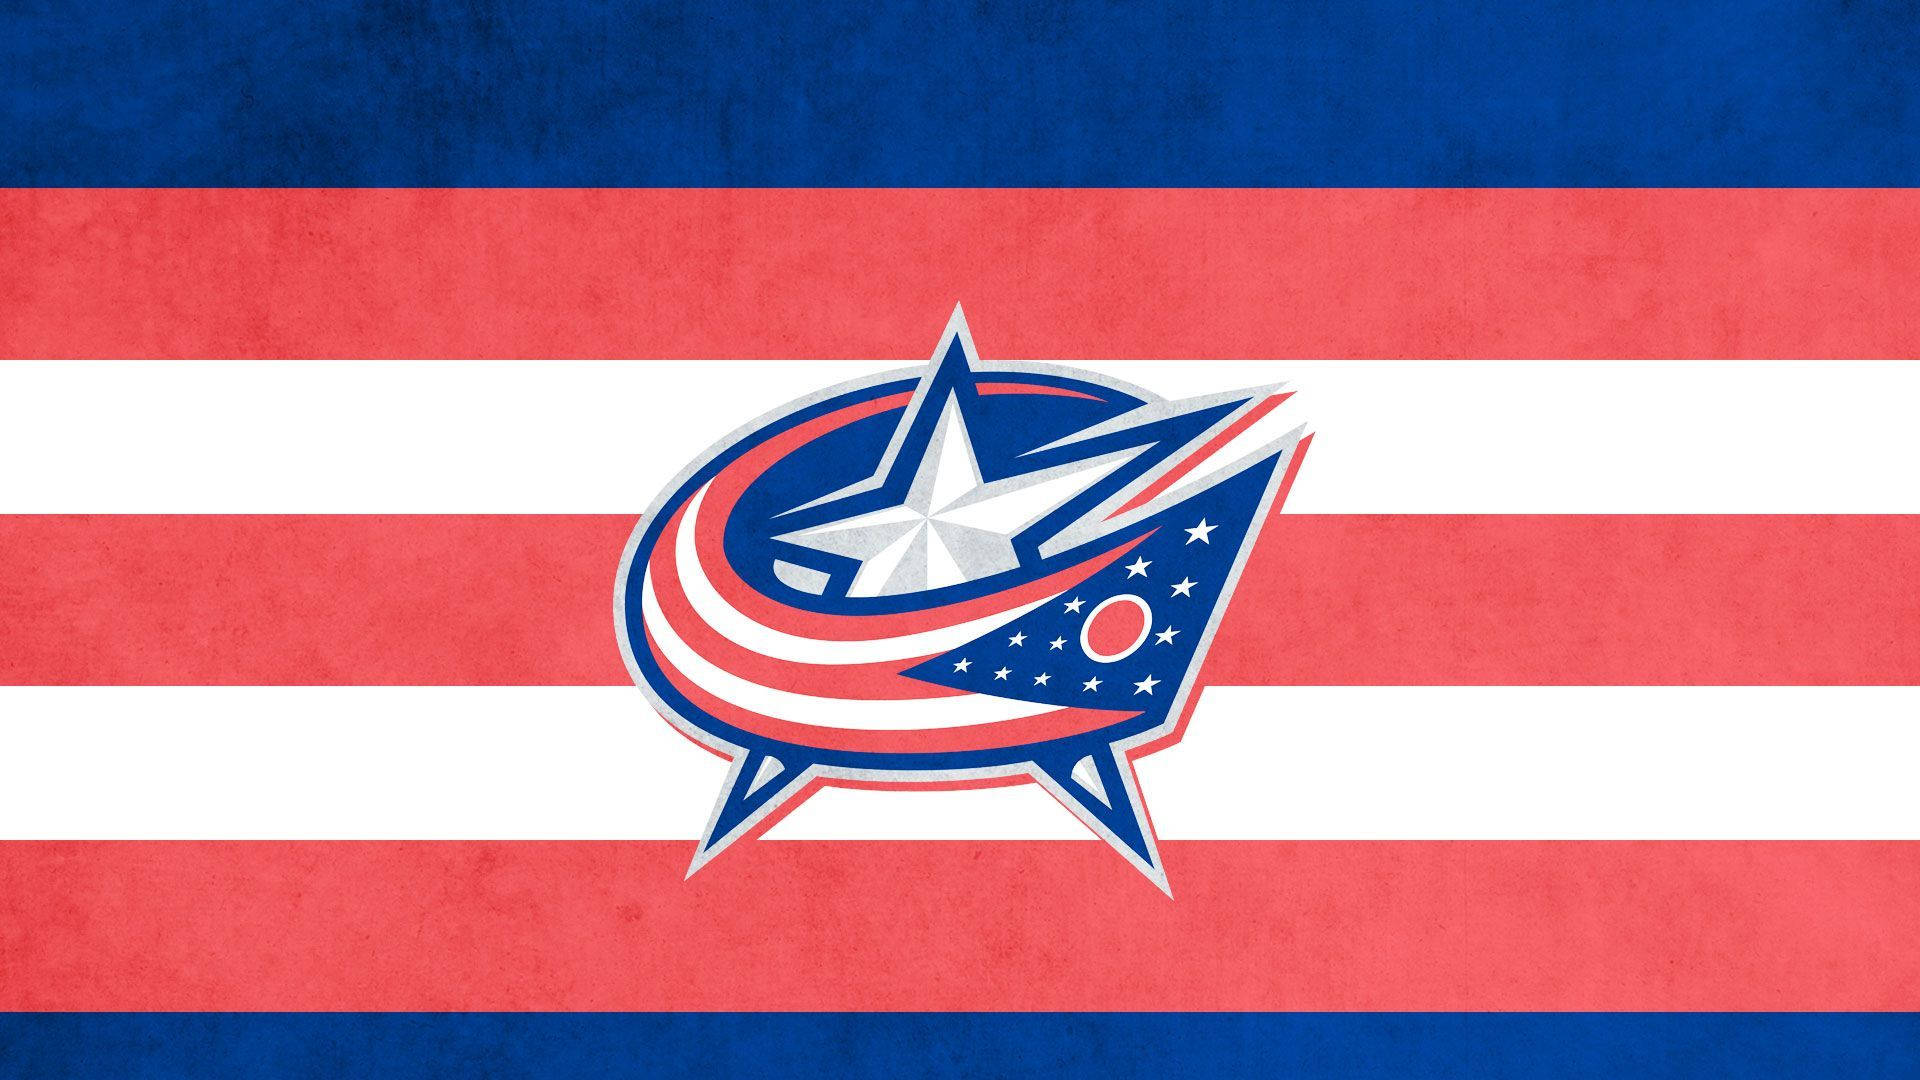 Columbus Blue Jackets Hockey Team On Striped Background Background